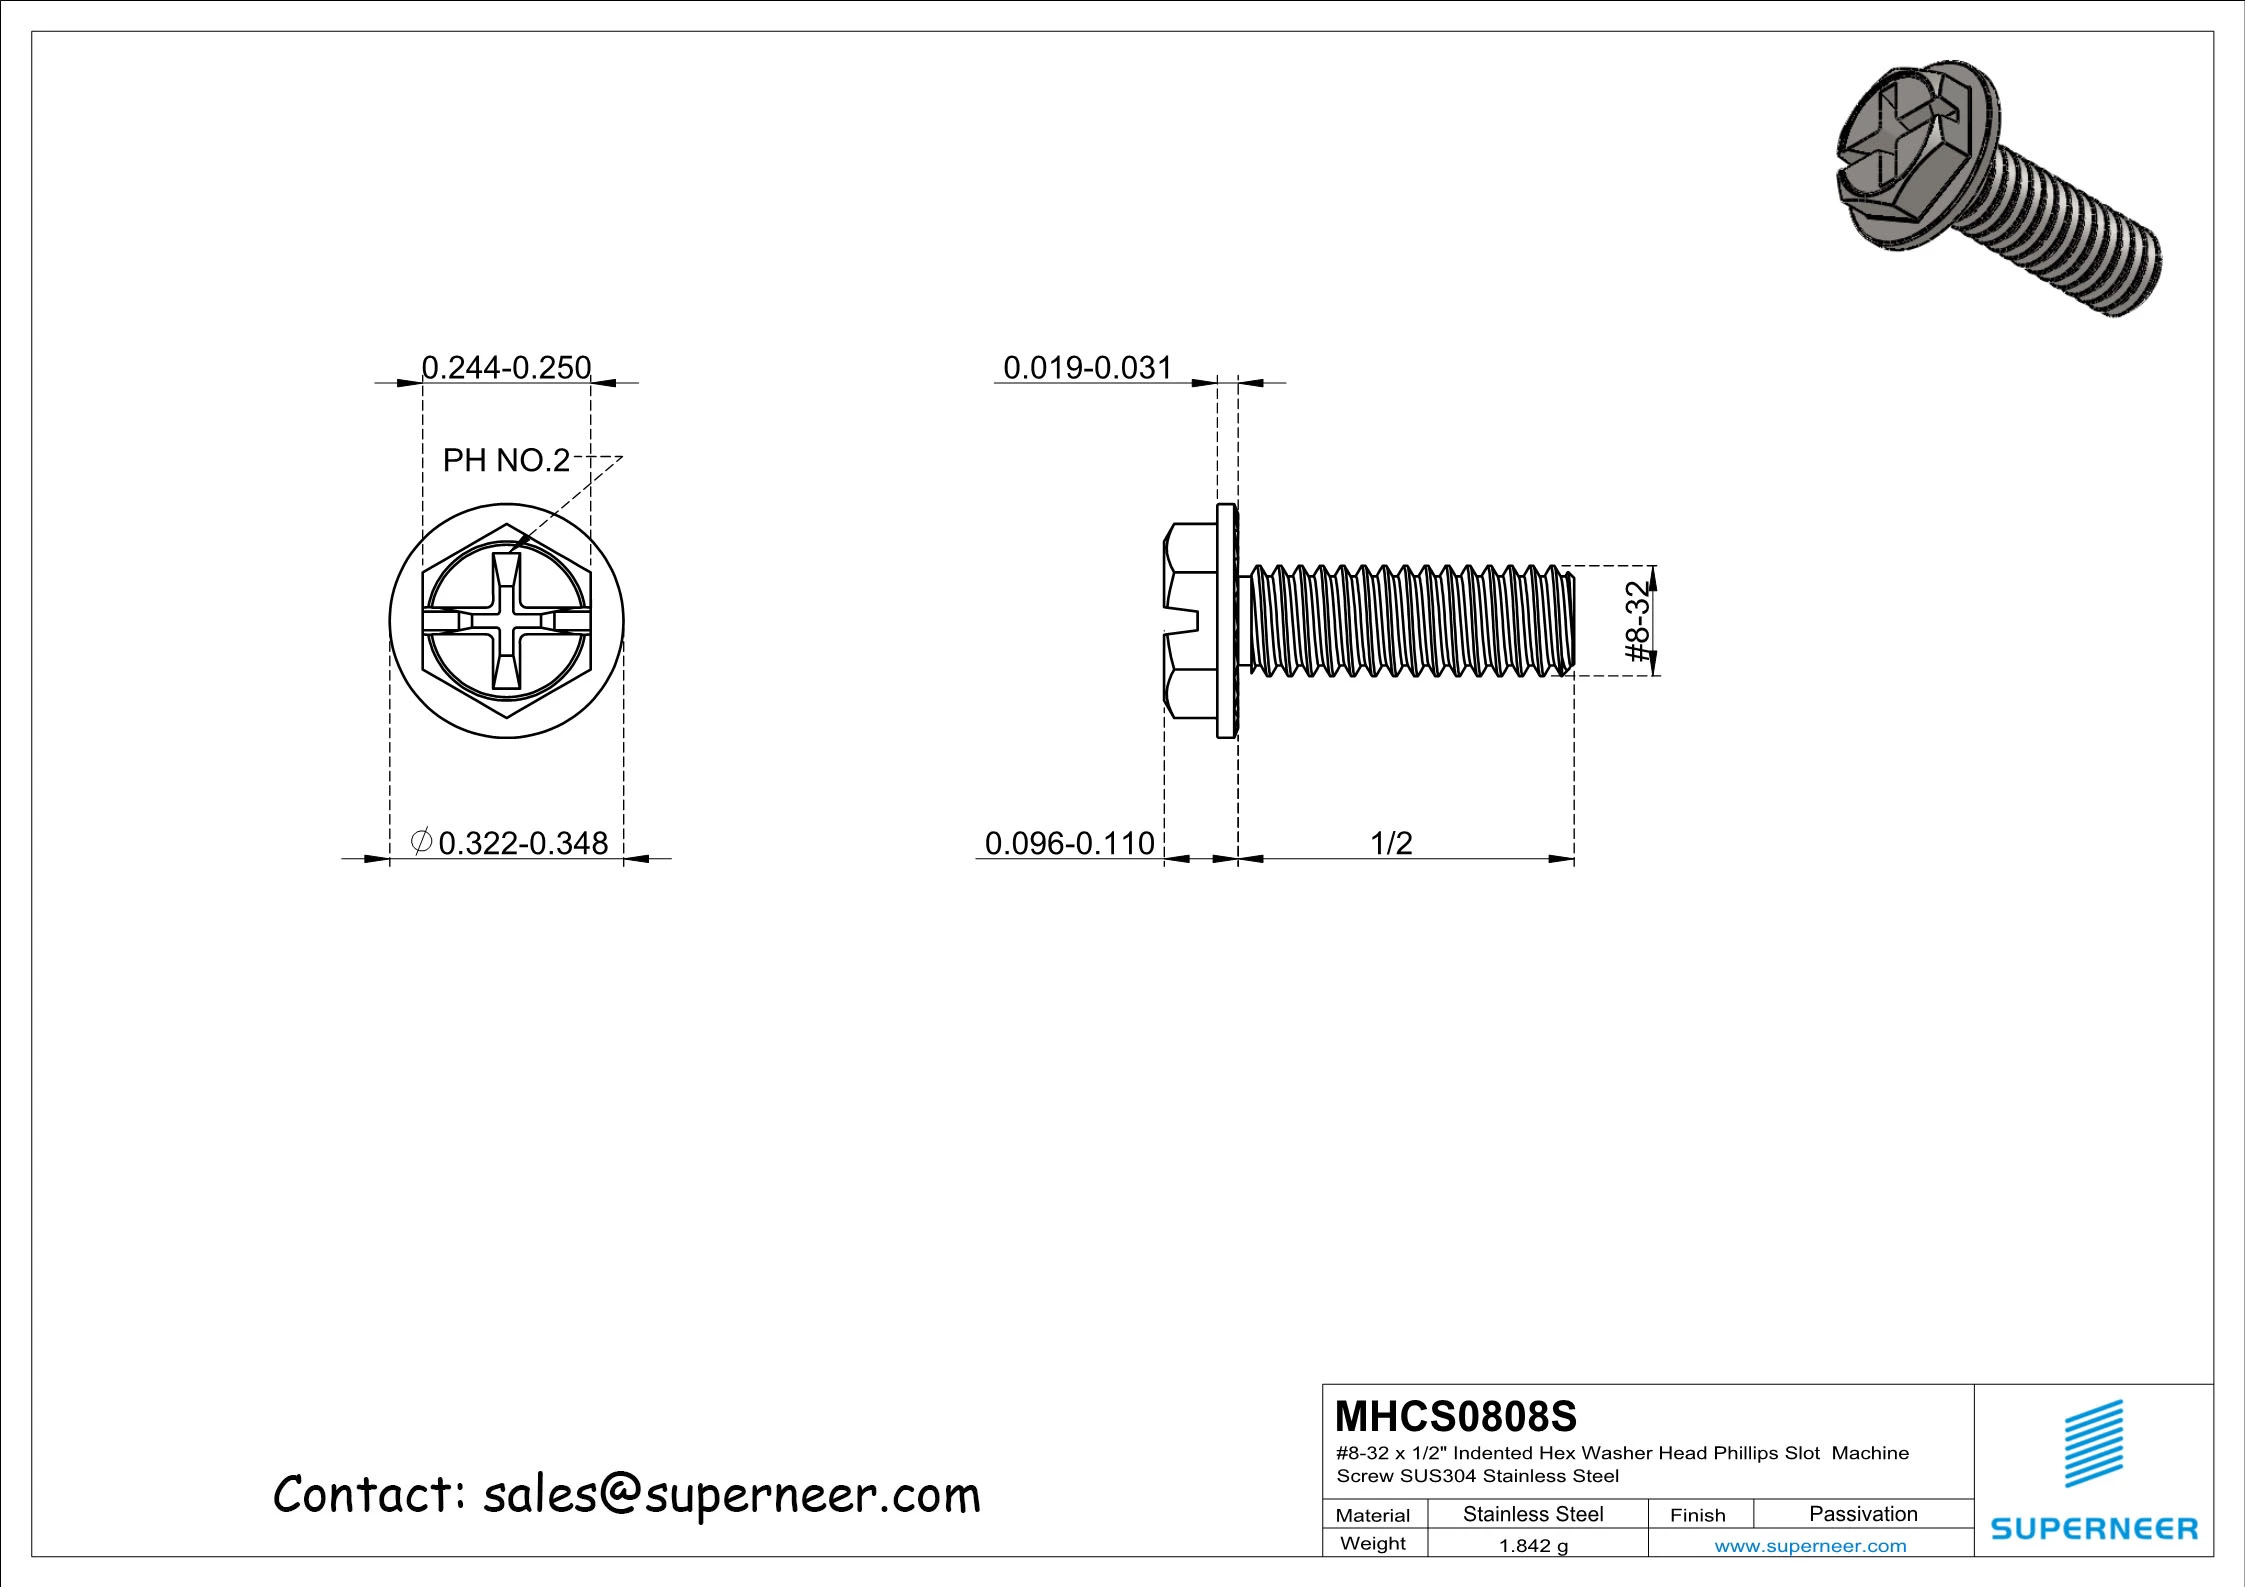 8-32 x 1/2" Indented Hex Washer Serrated Head Phillips Slot Machine Screw SUS304 Stainless Steel Inox